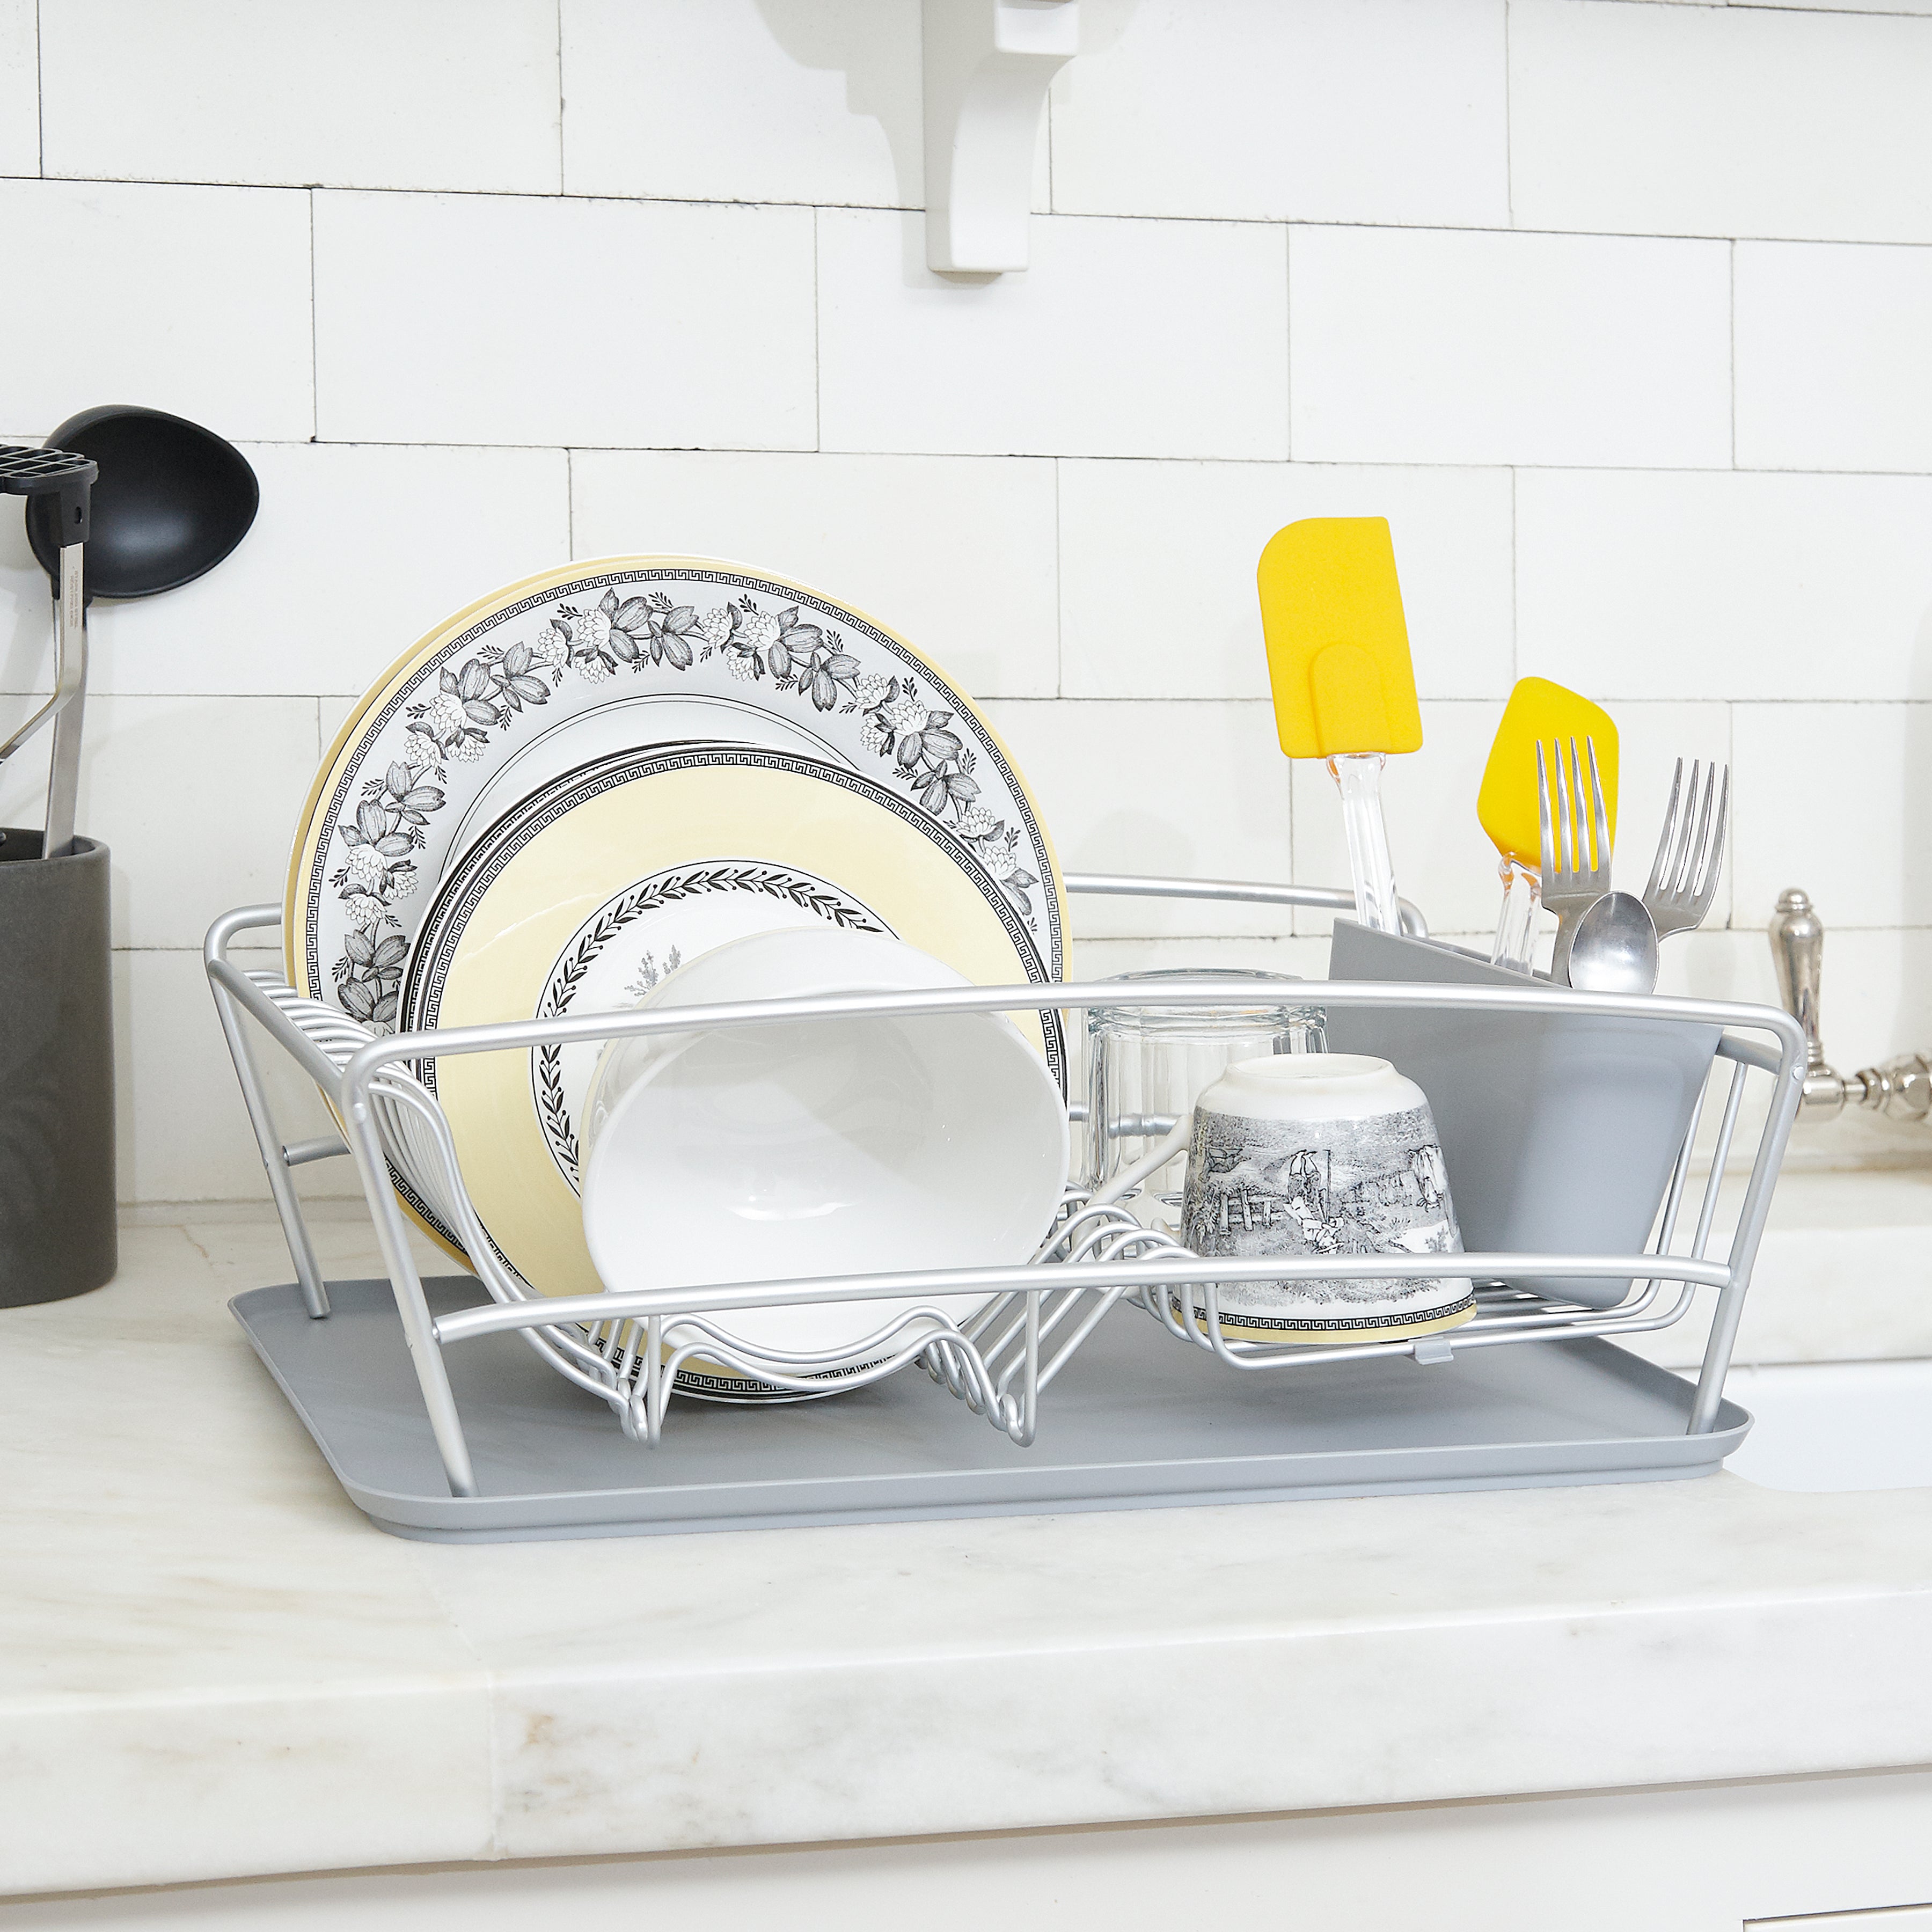 Metallic Folding Dish Rack – The Better House